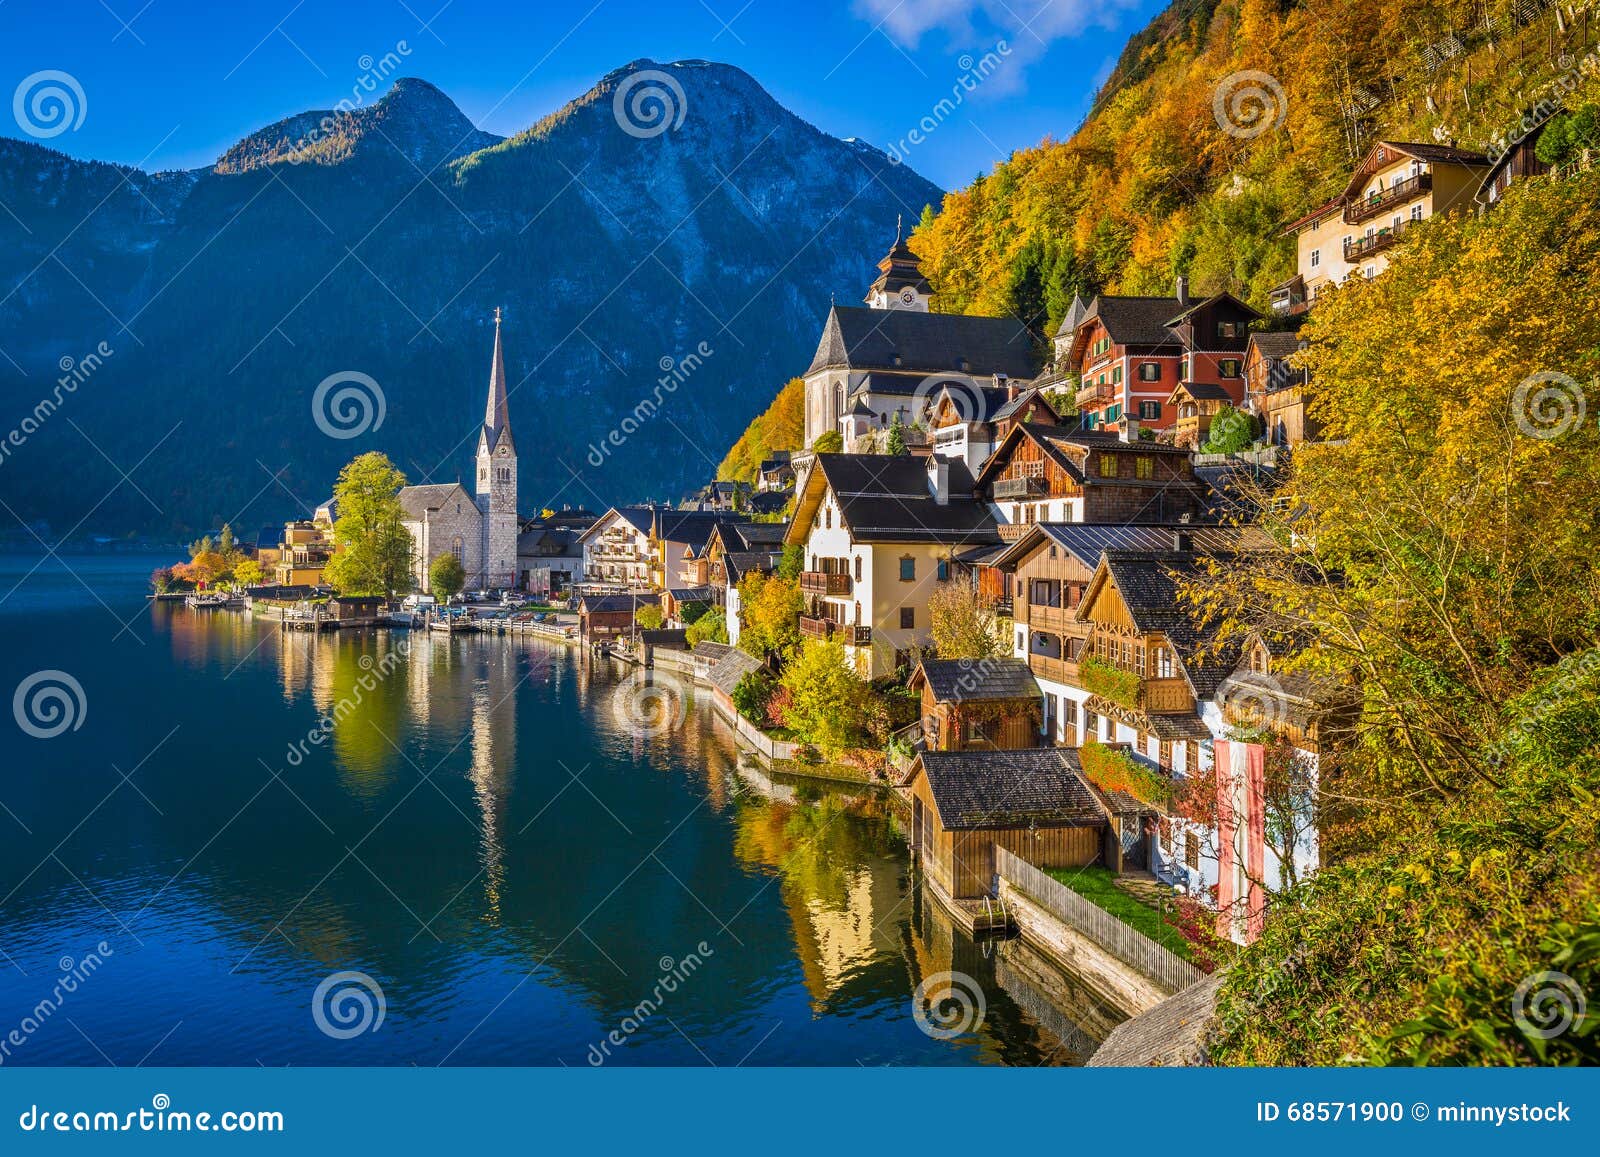 hallstatt mountain village in fall, salzkammergut, austria